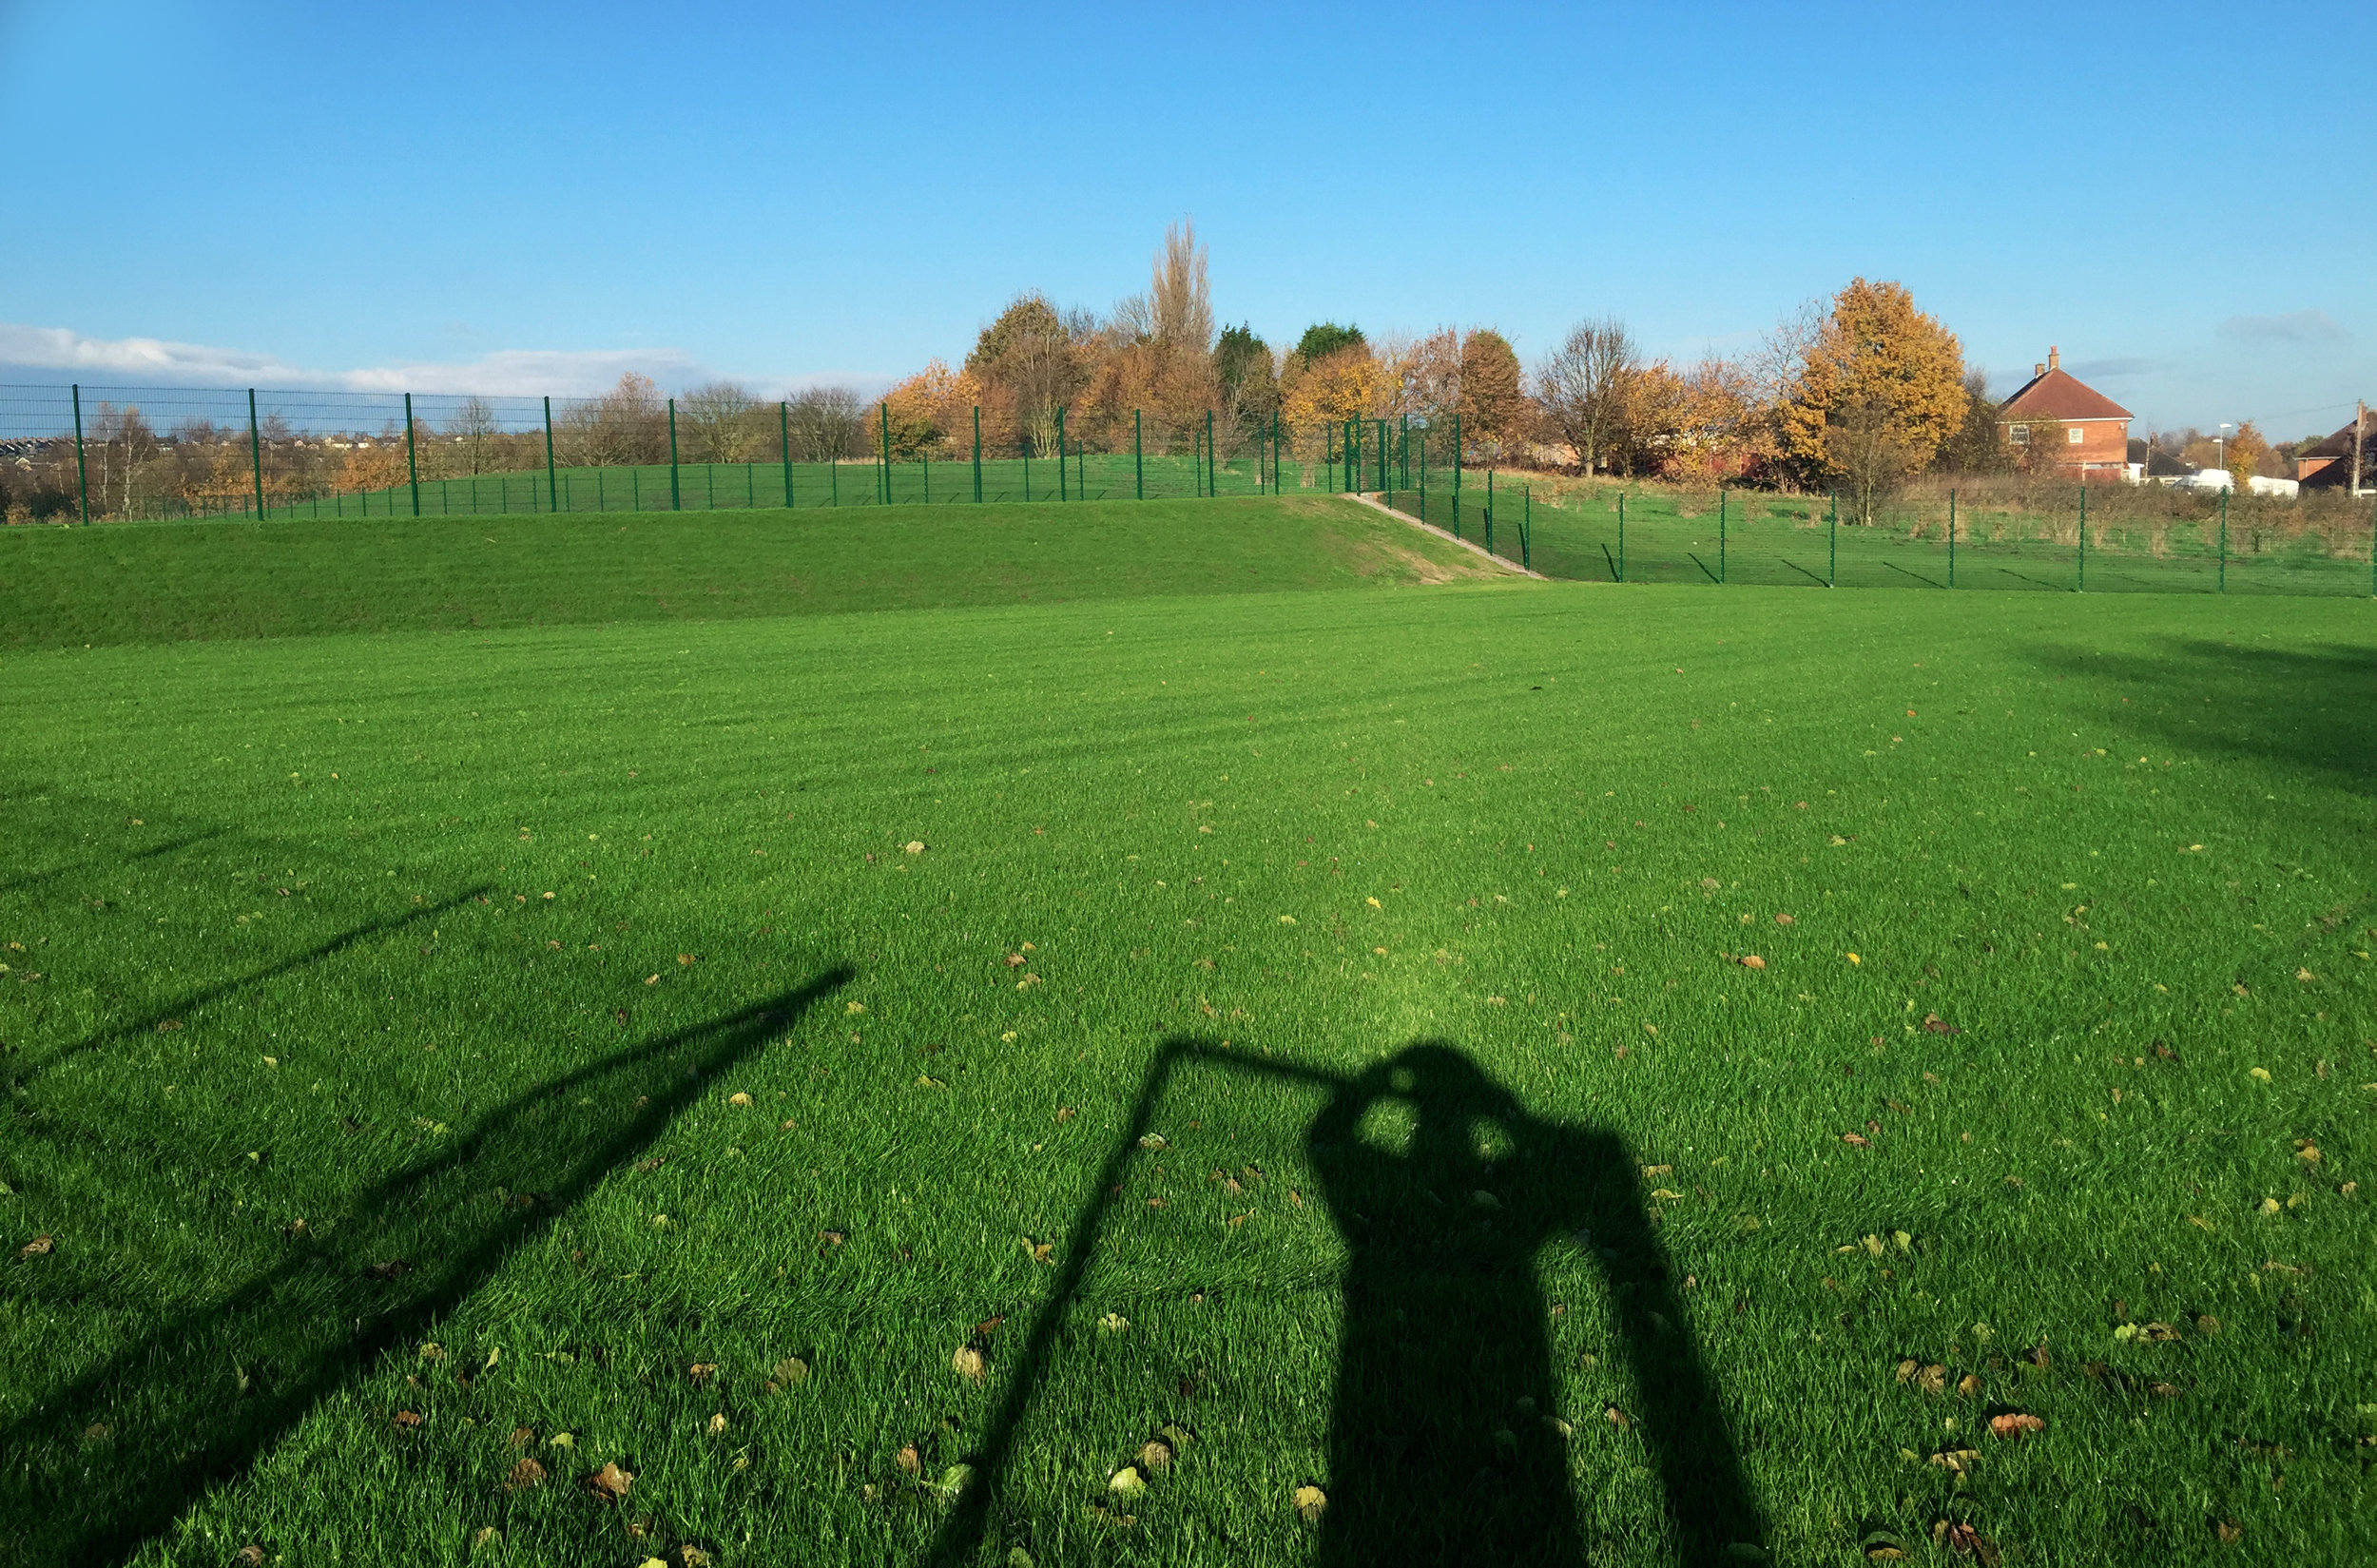  Mini-soccer pitch after first cut (December 2014). 